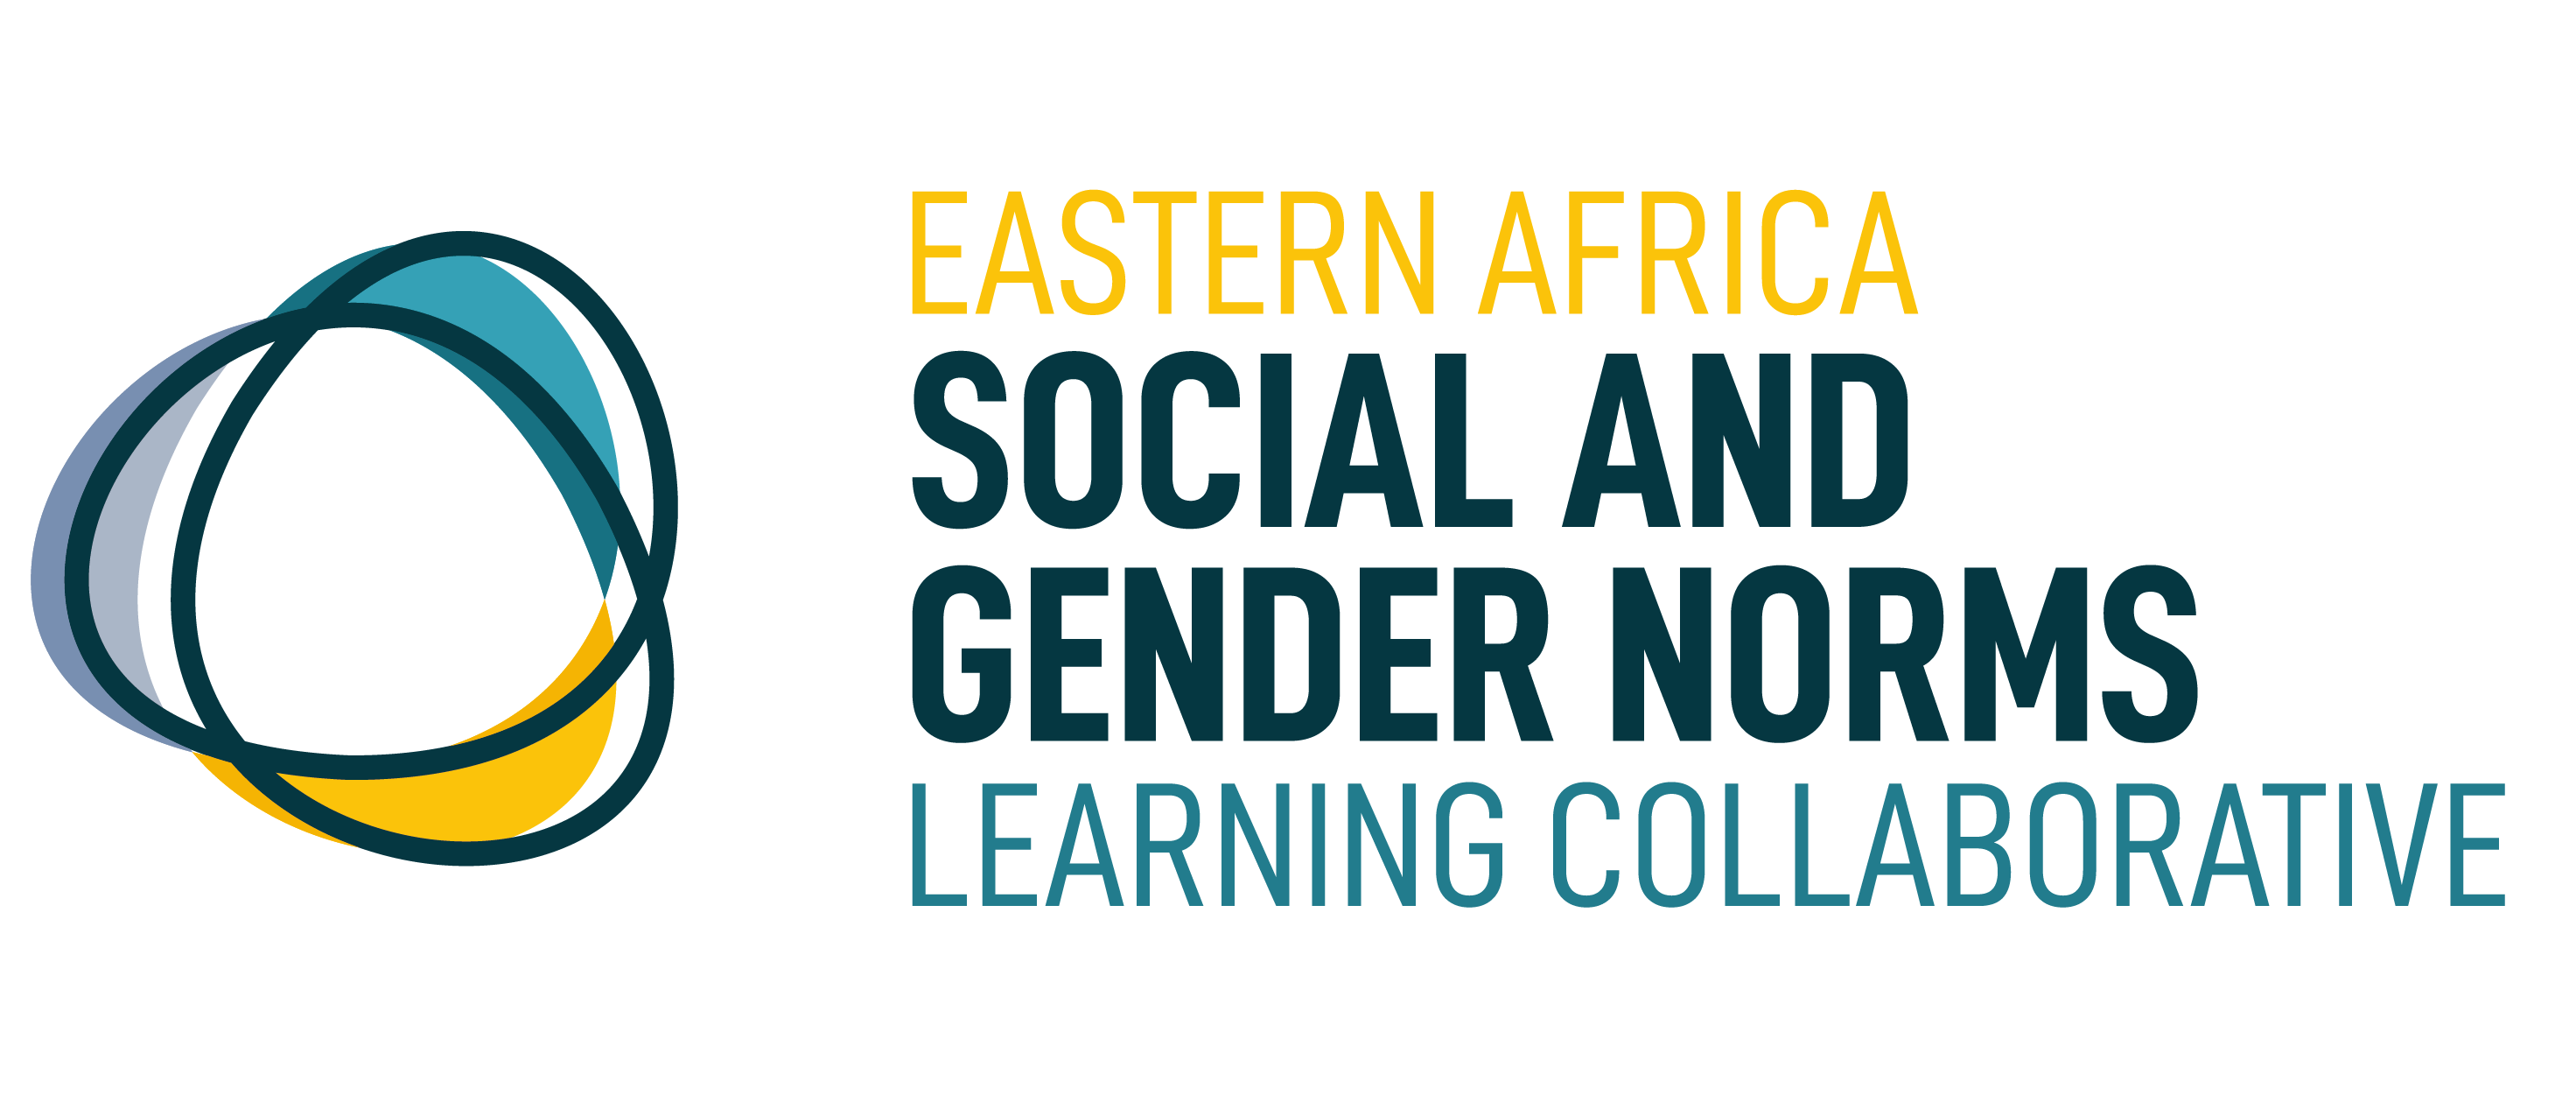 EALC conference logo